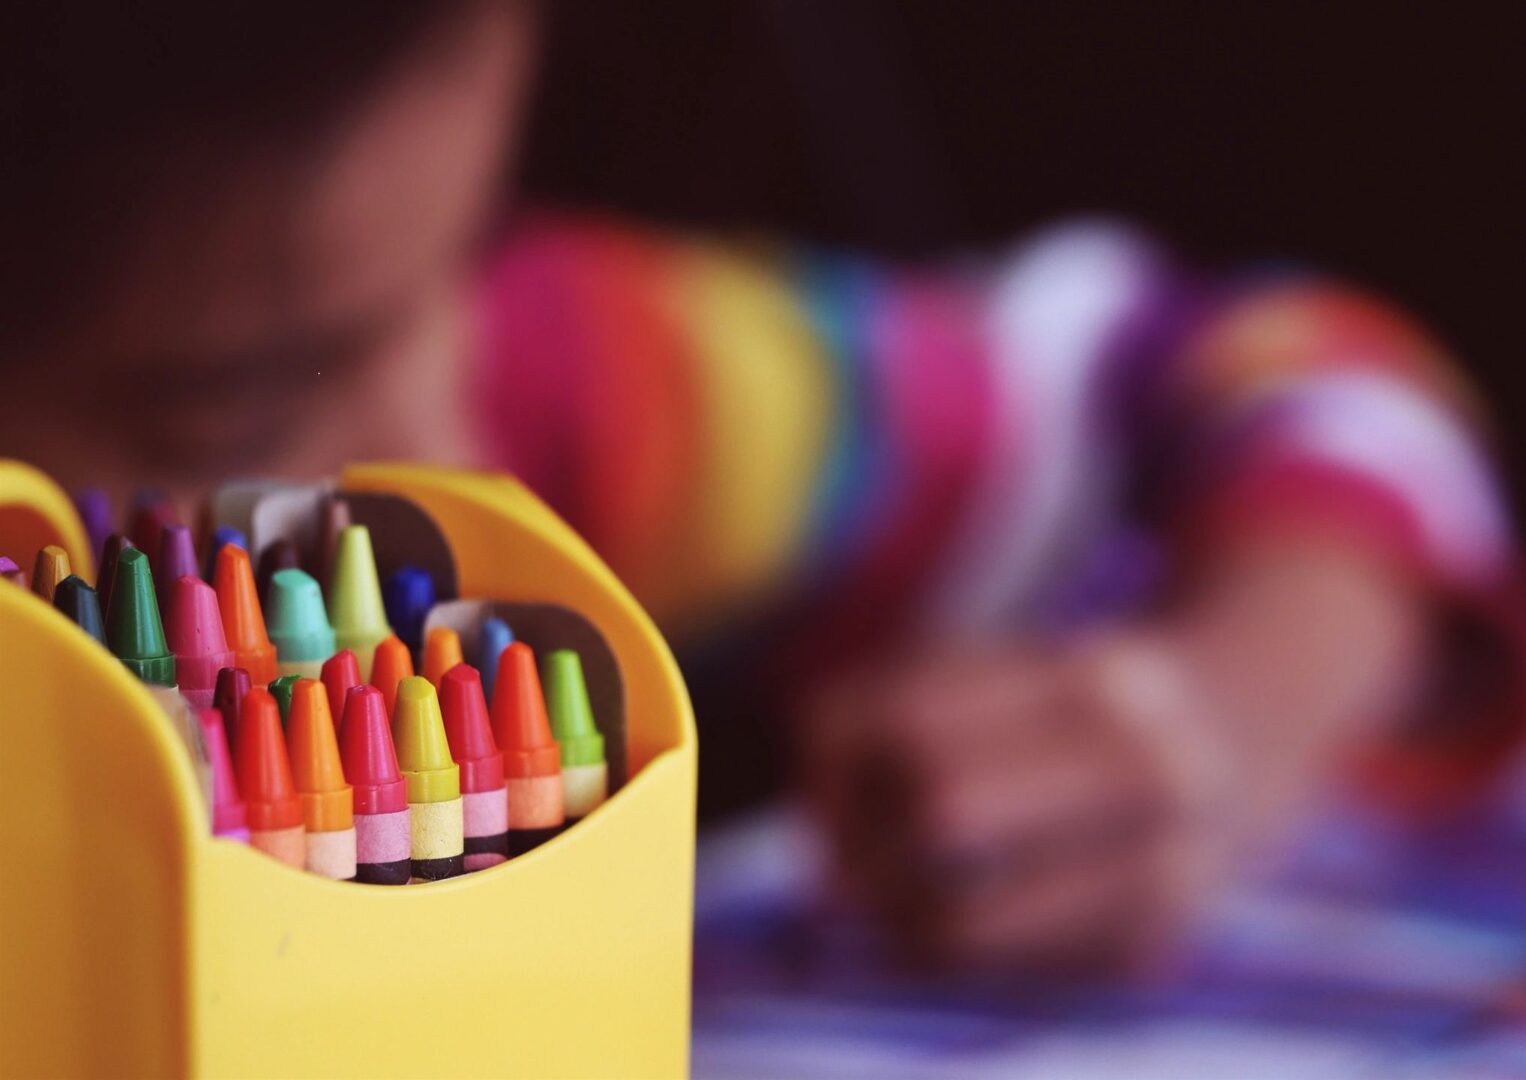 A close up of a box of crayons